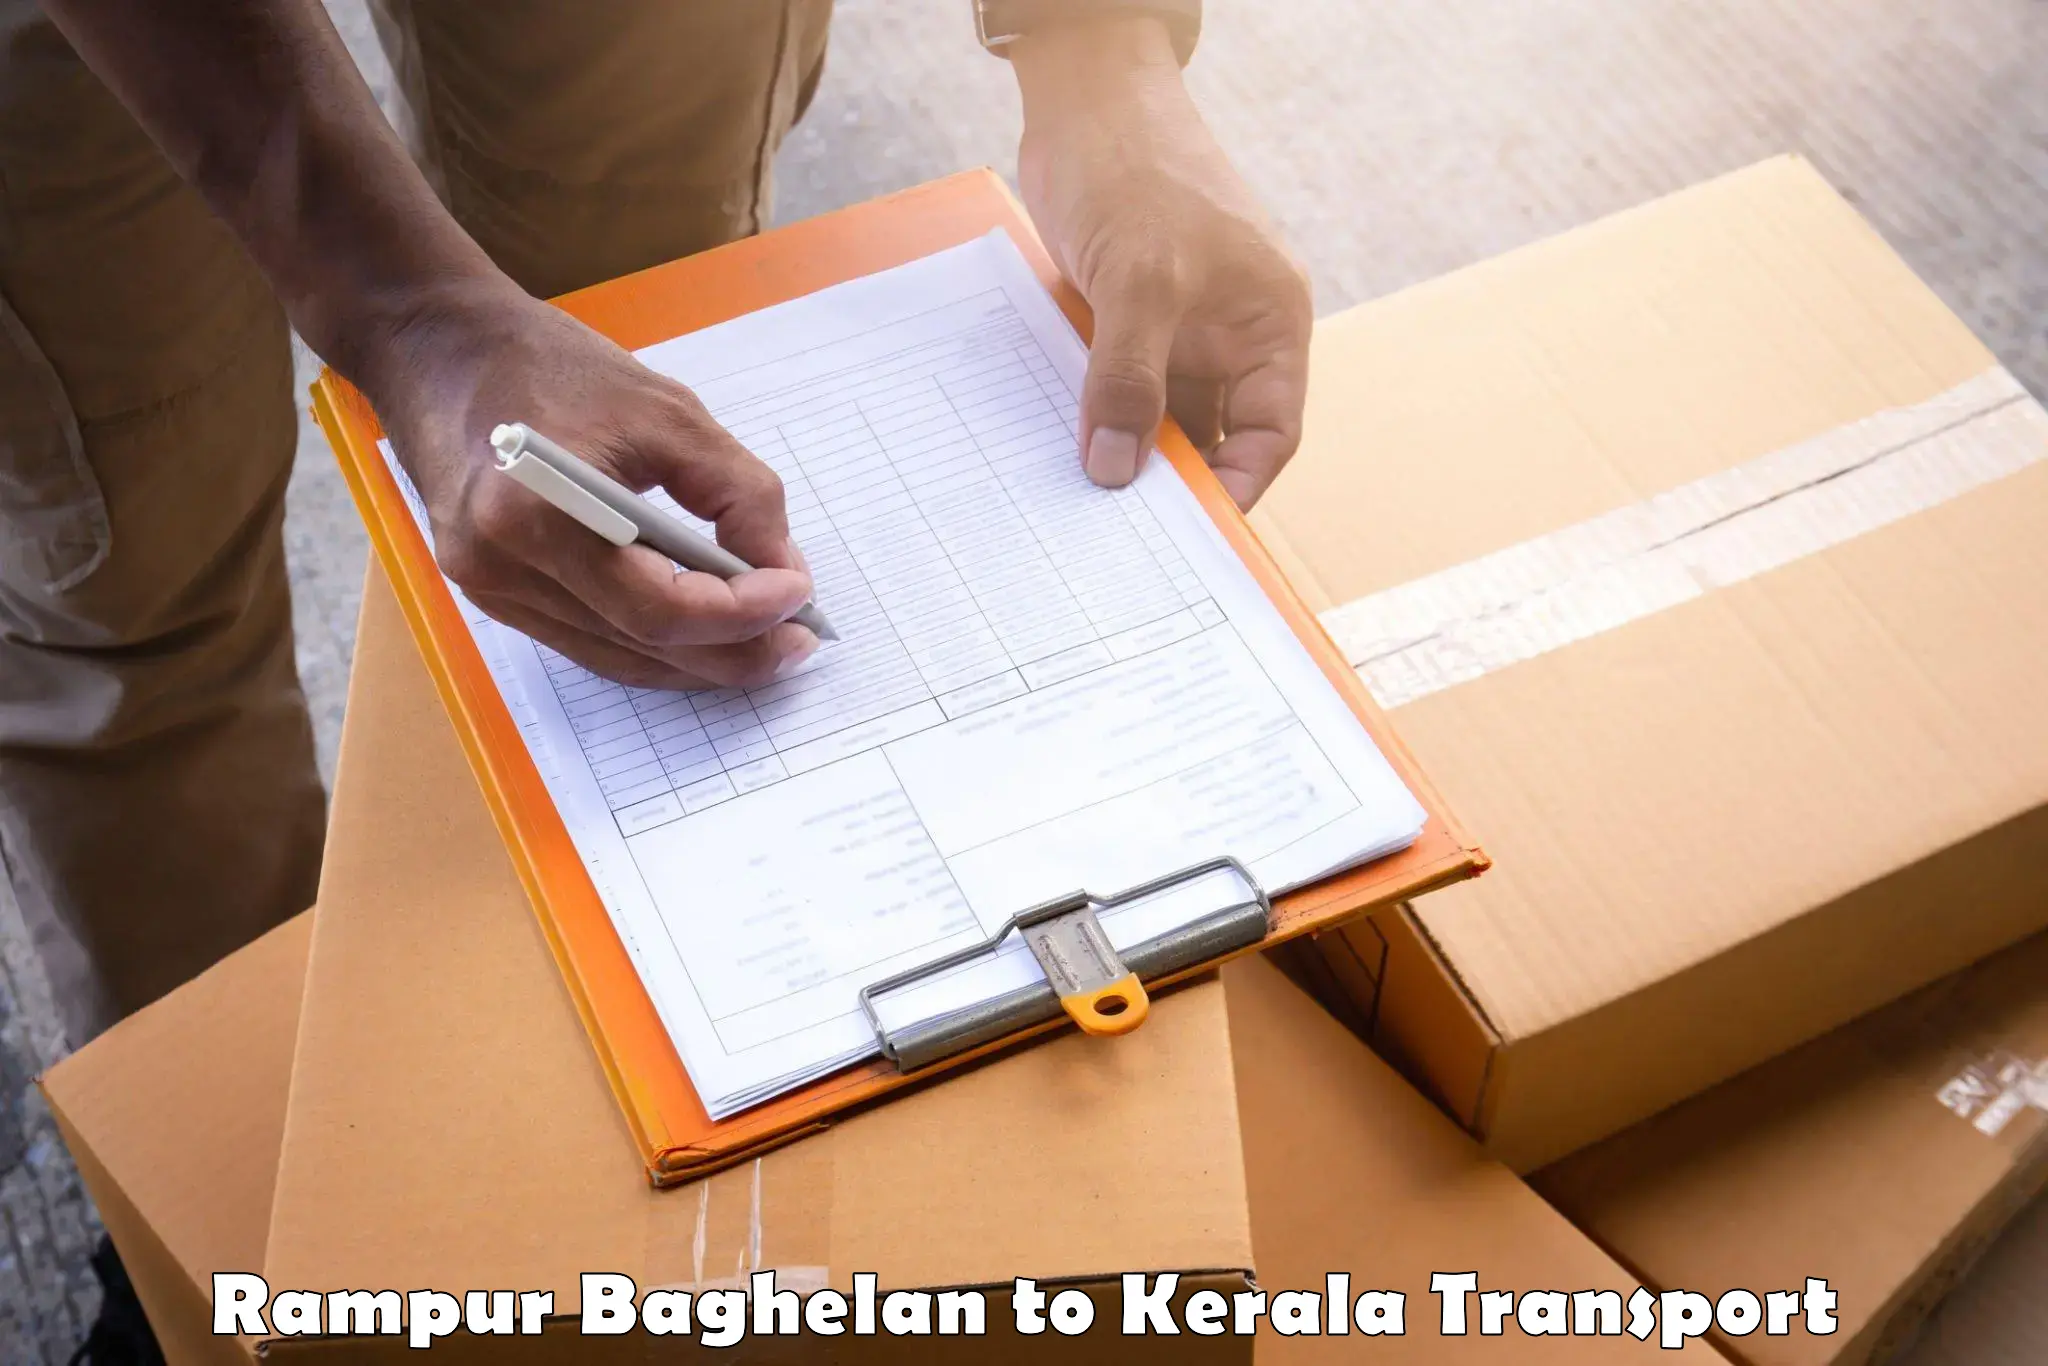 Truck transport companies in India in Rampur Baghelan to Kochi